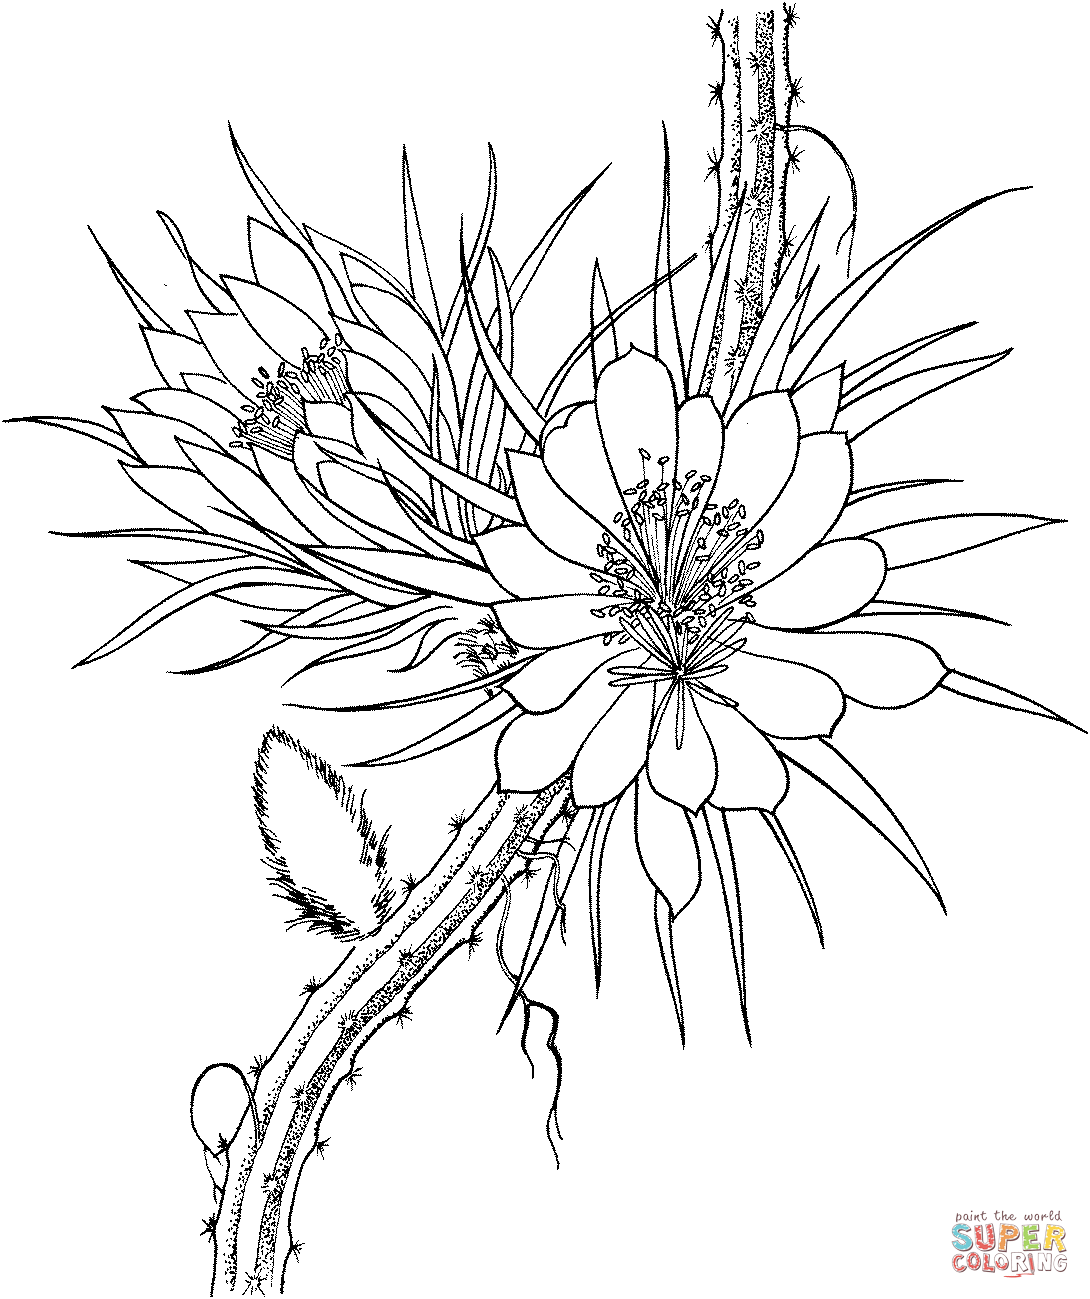 Selenicereus Grandiflorus Reina de la Noche Cactus de Cactus